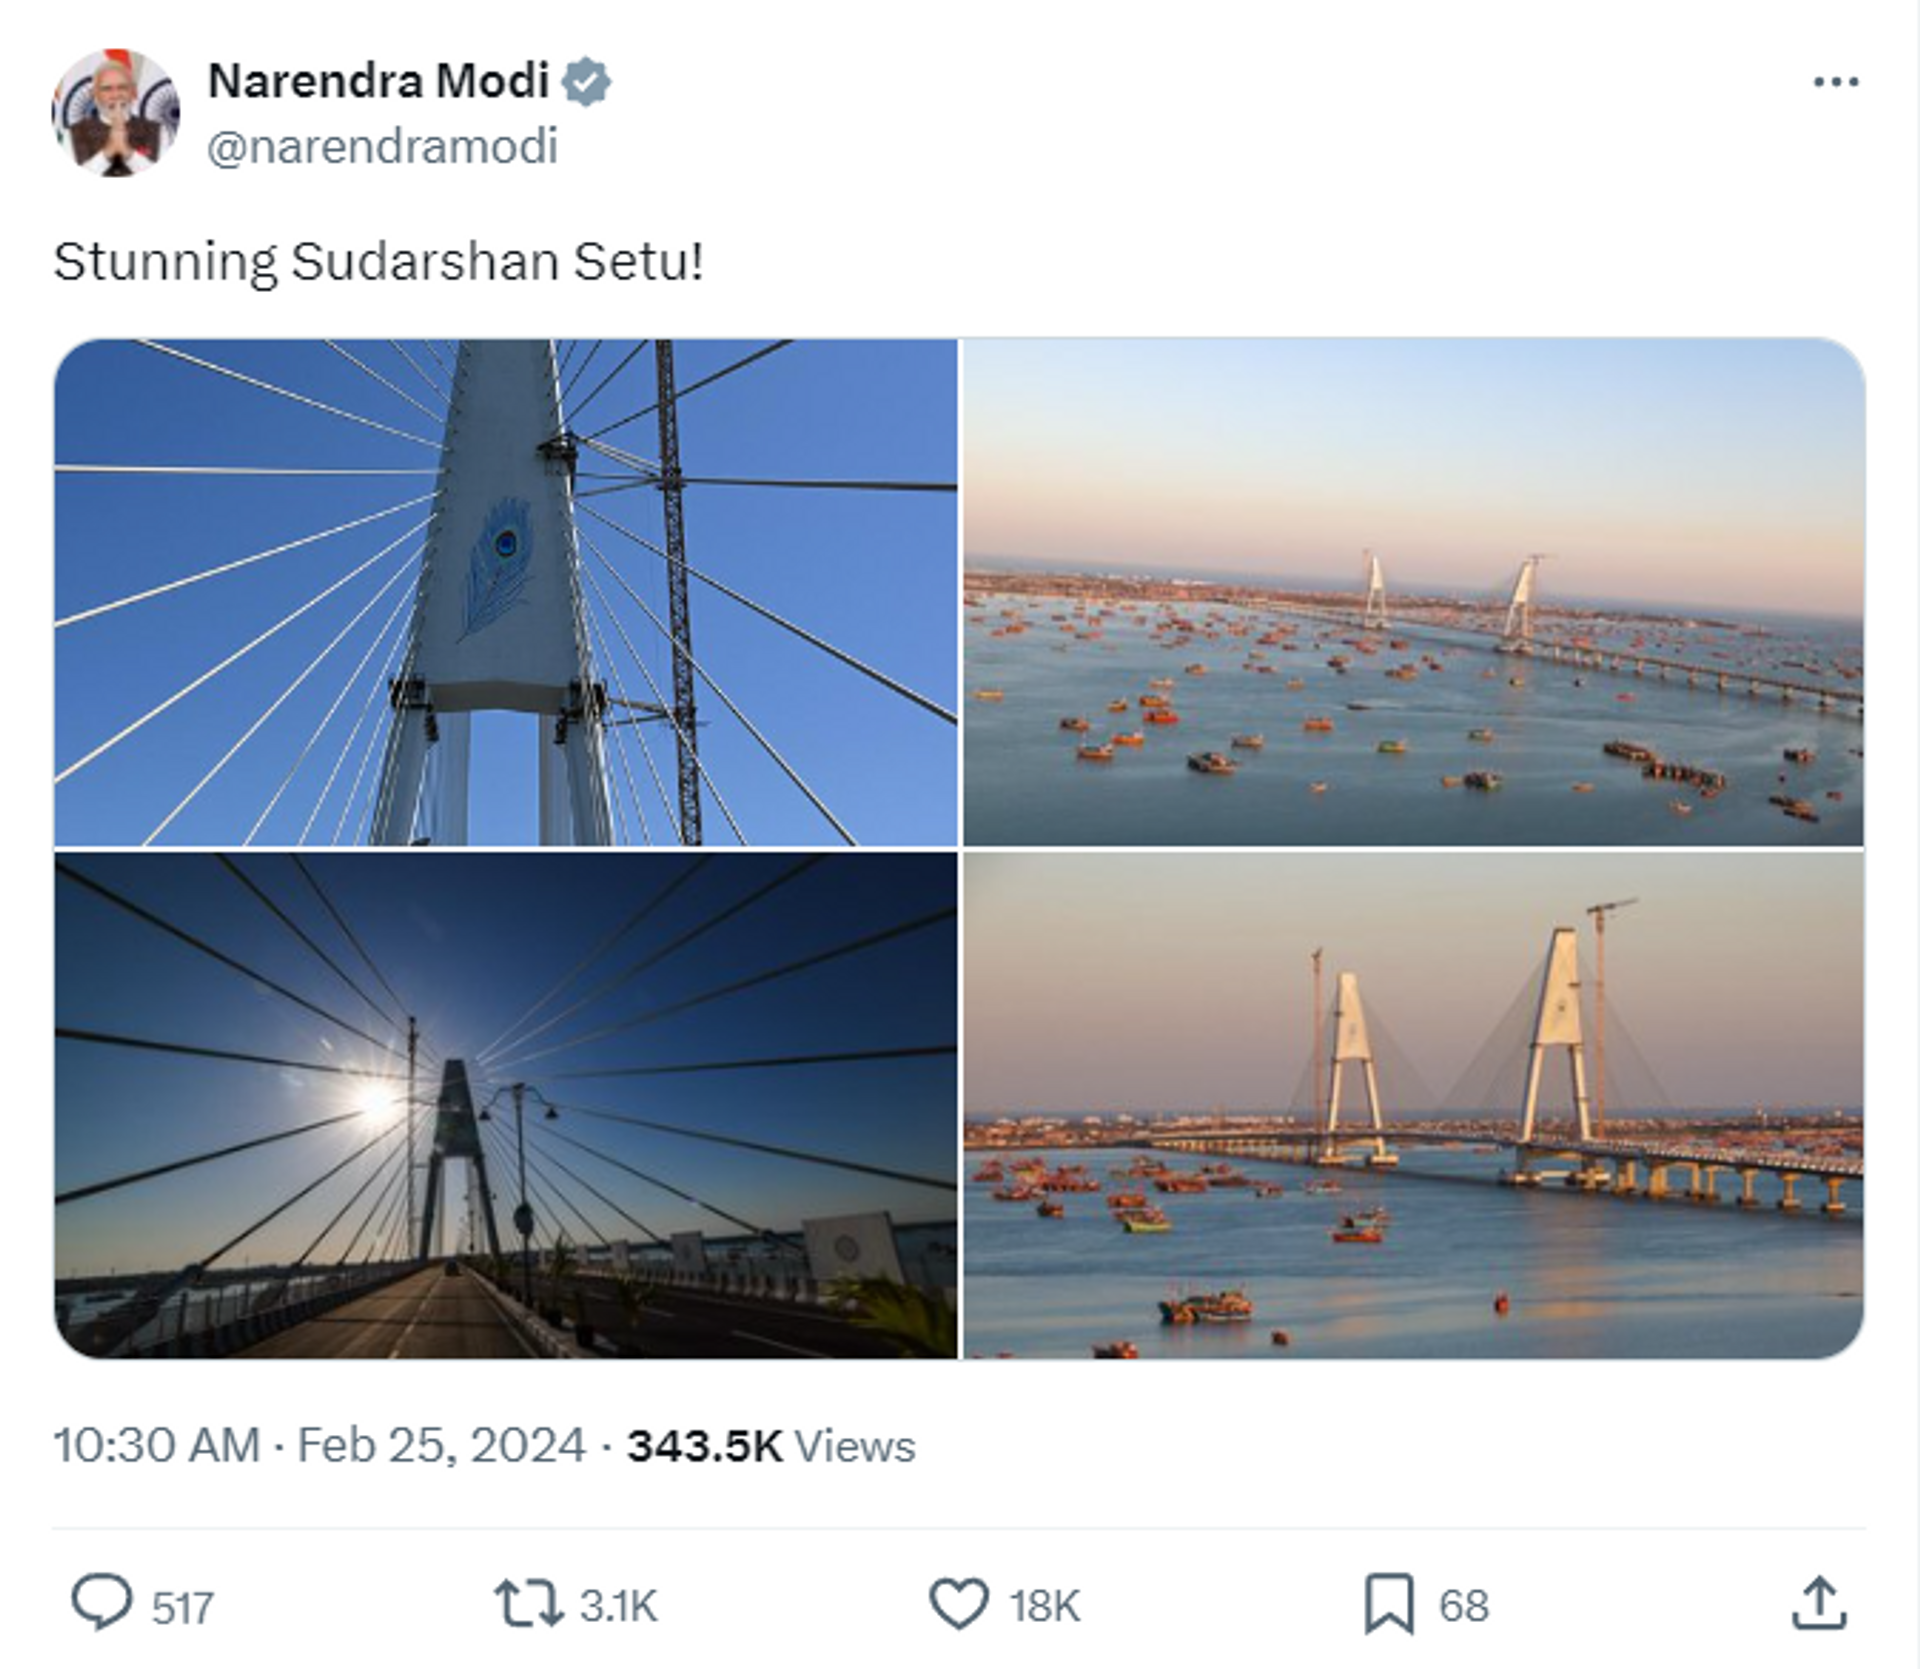 PM Modi Unveils Sudarshan Setu, India's Longest Cable-Stayed Bridge - Sputnik India, 1920, 25.02.2024